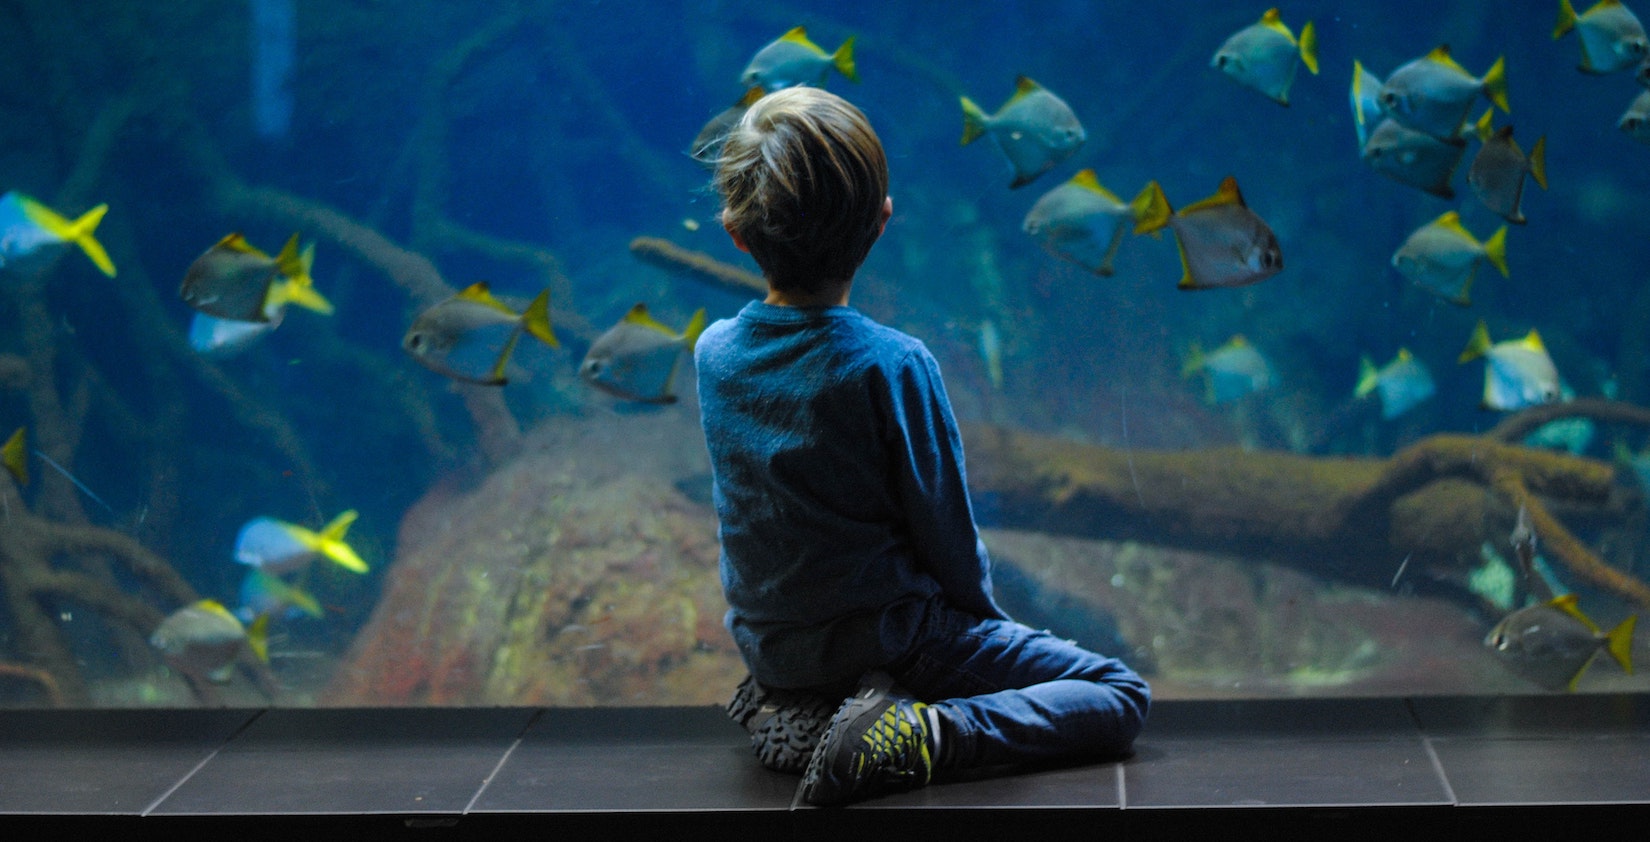 Little kid looking at big aquarium.